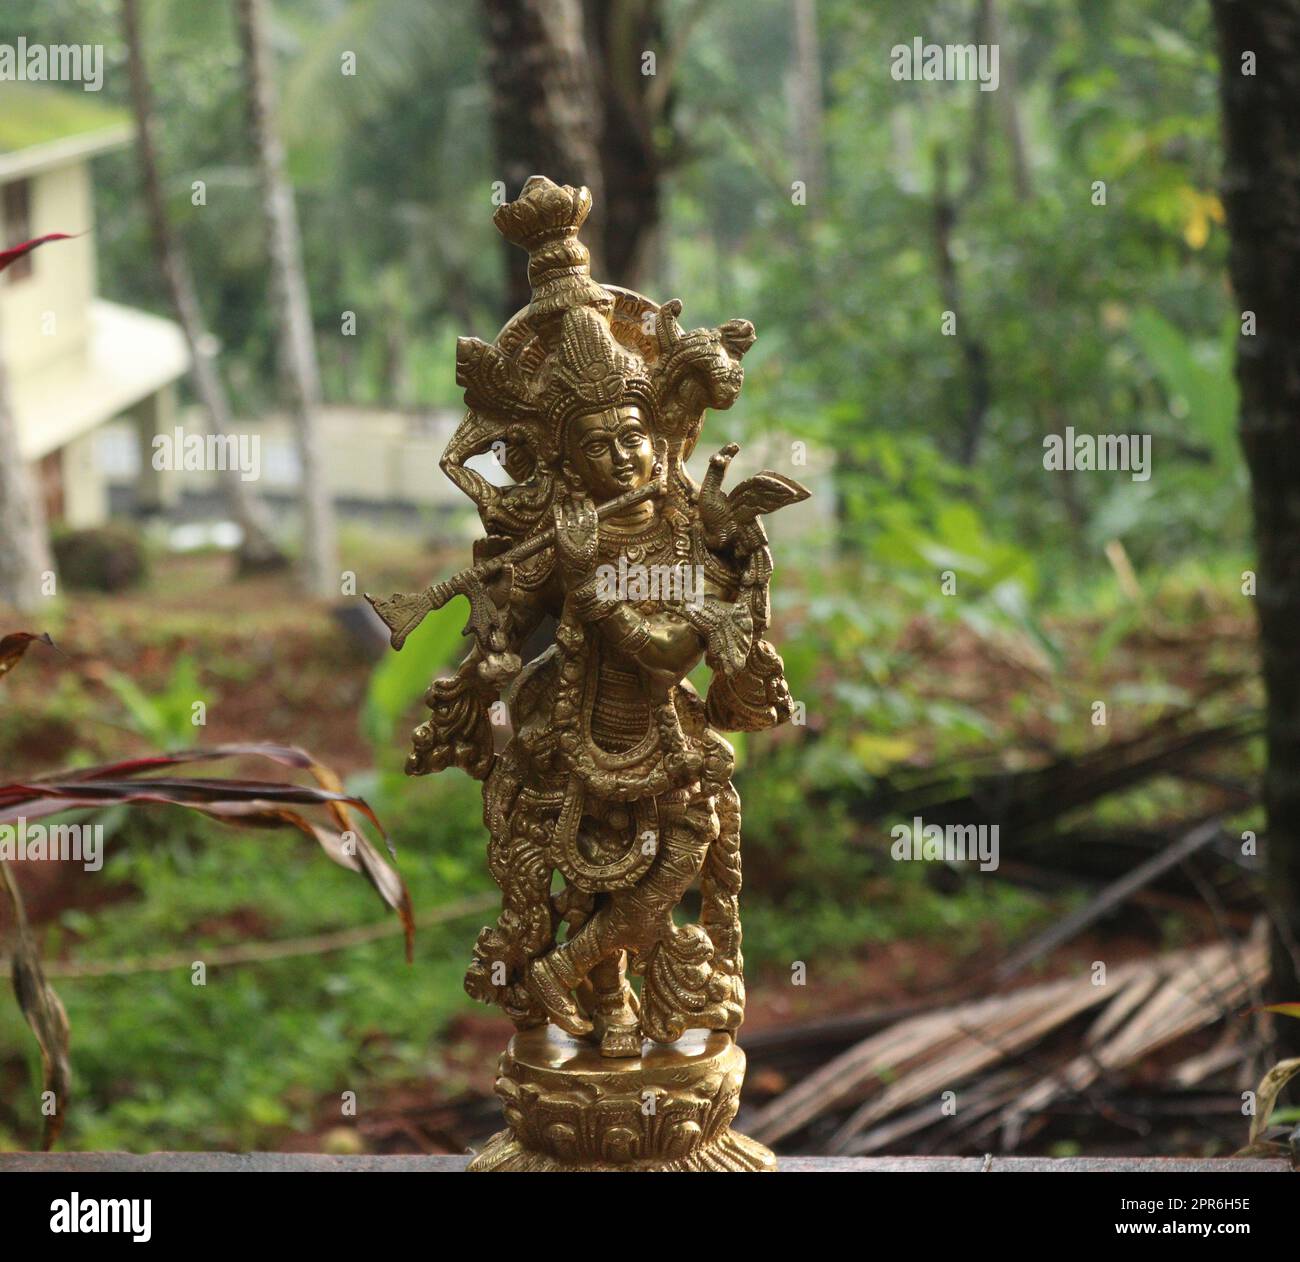 Lord krishna brass idol in golden color Stock Photo